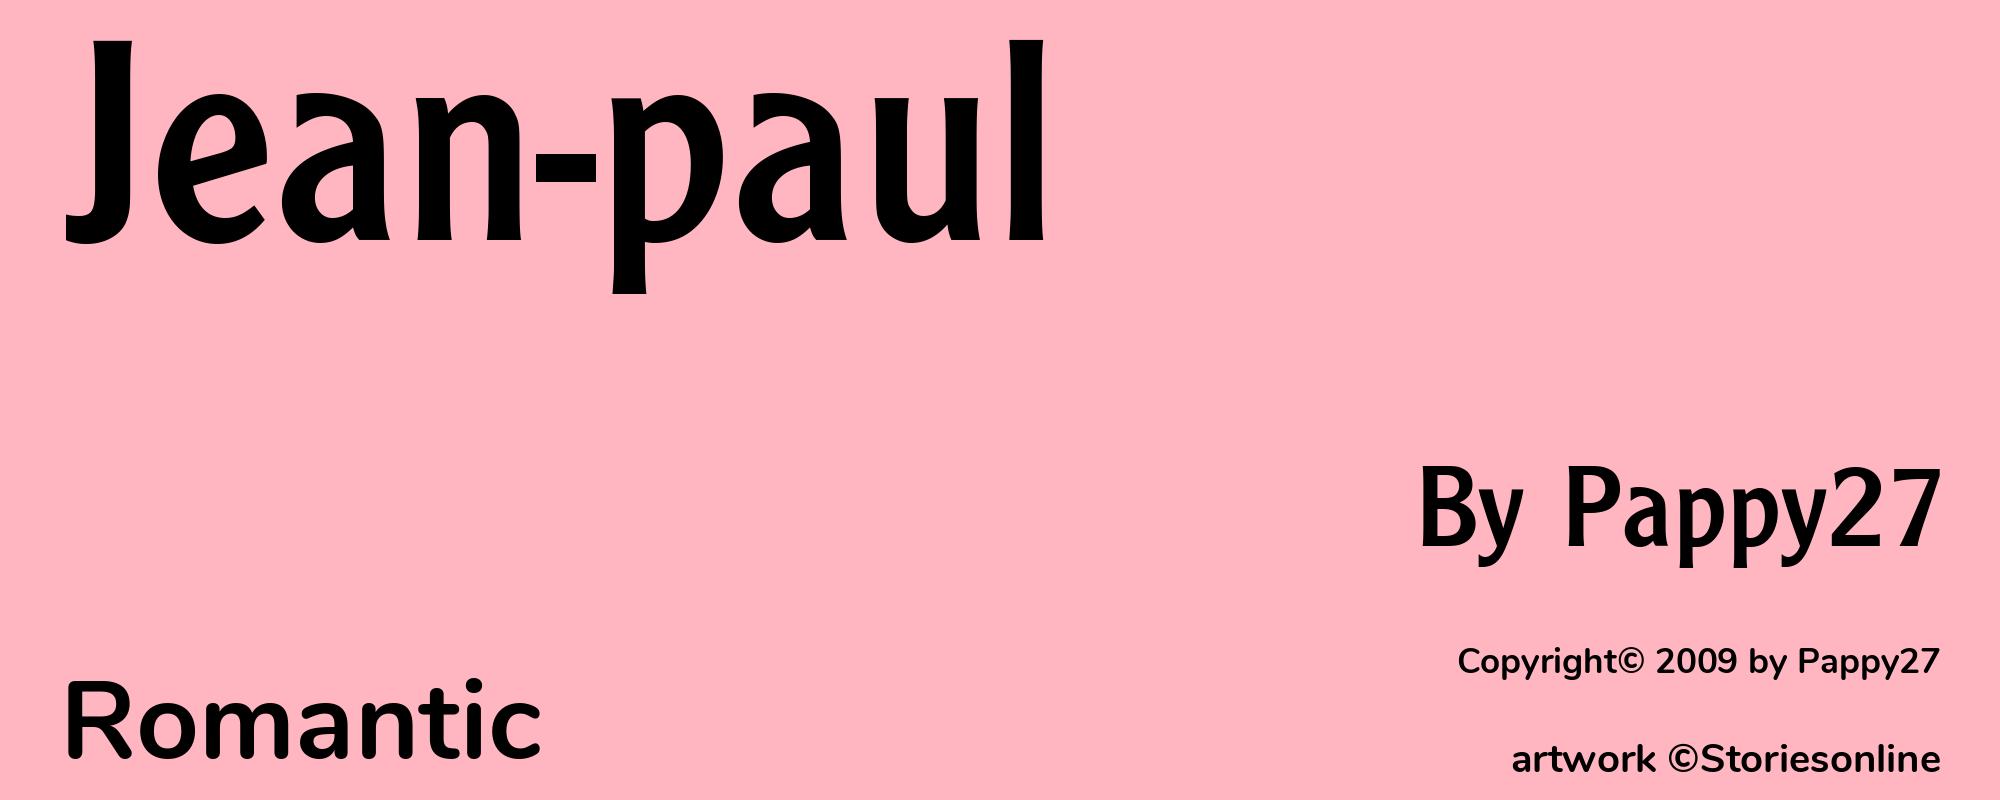 Jean-paul - Cover